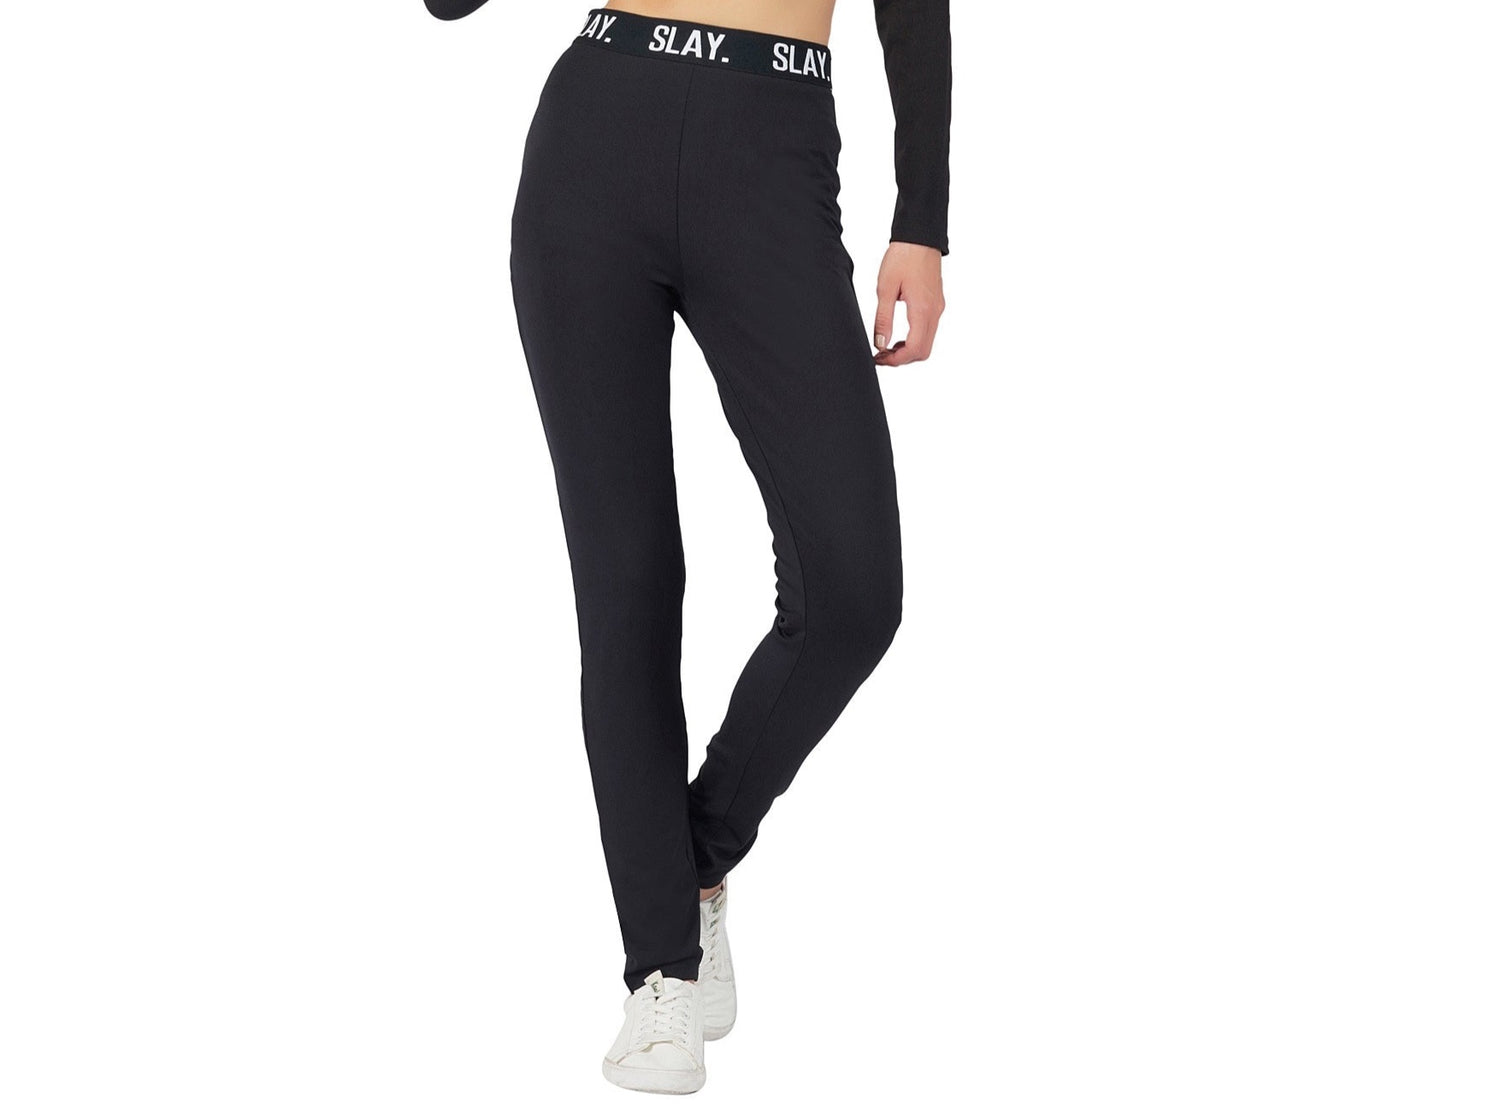 SLAY. Sport Women's Activewear Full Sleeves Black Crop Top